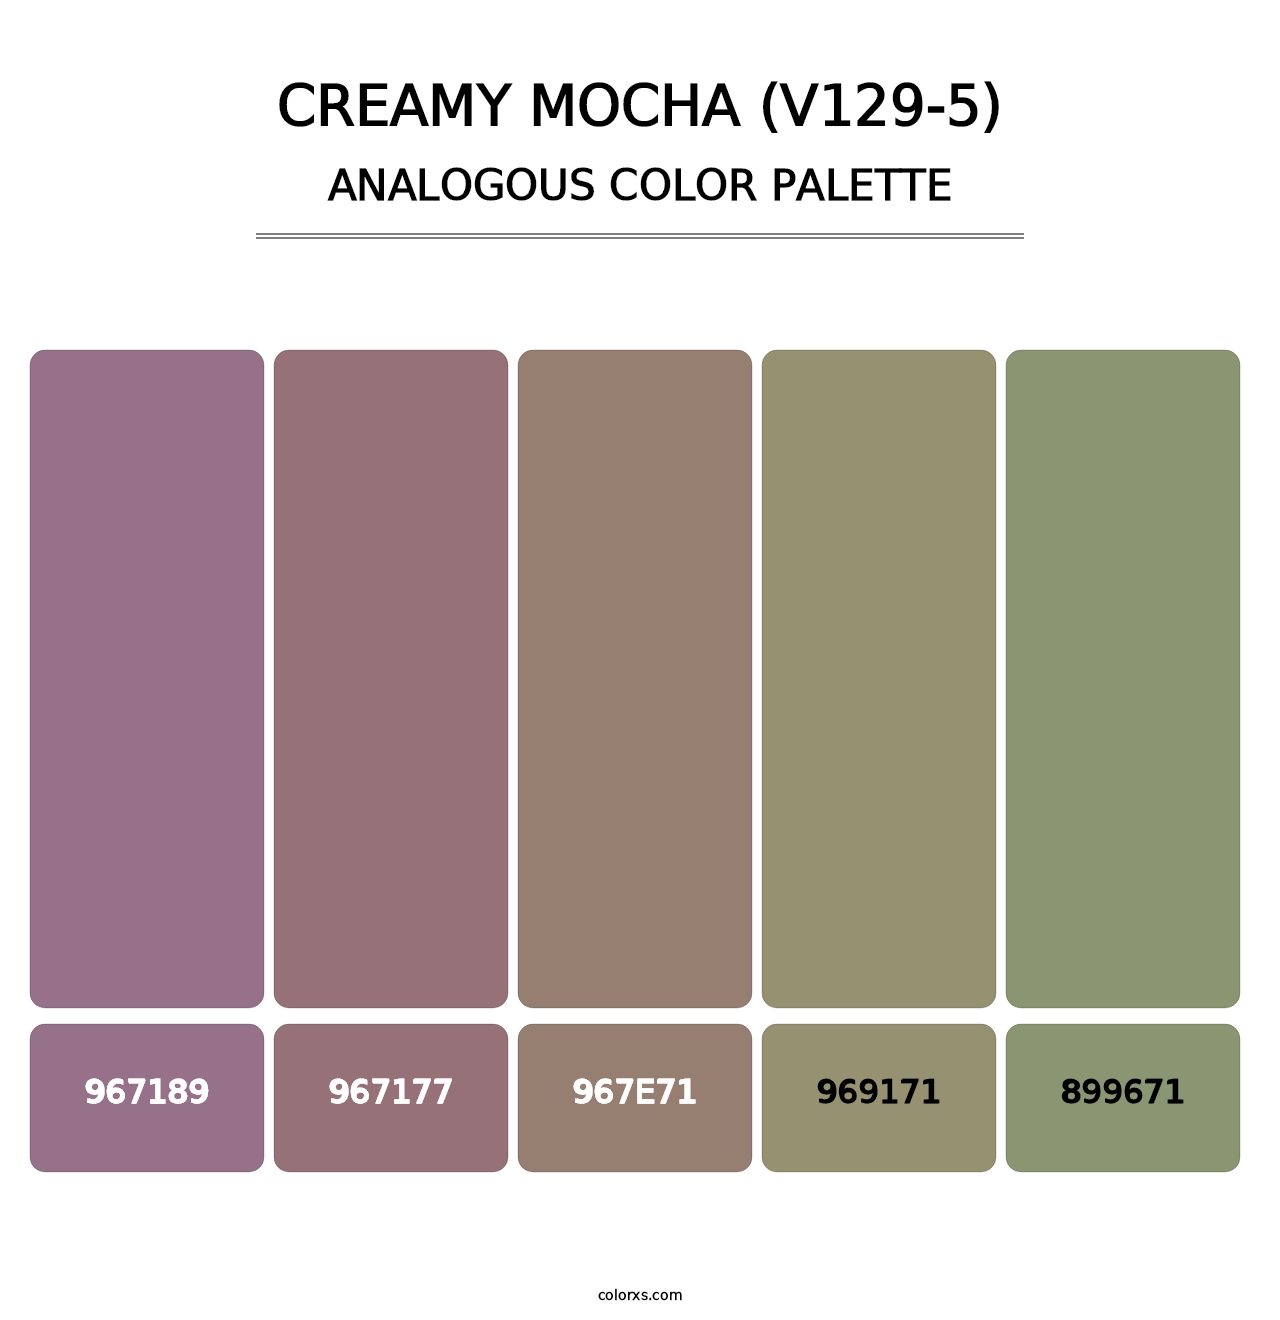 Creamy Mocha (V129-5) - Analogous Color Palette